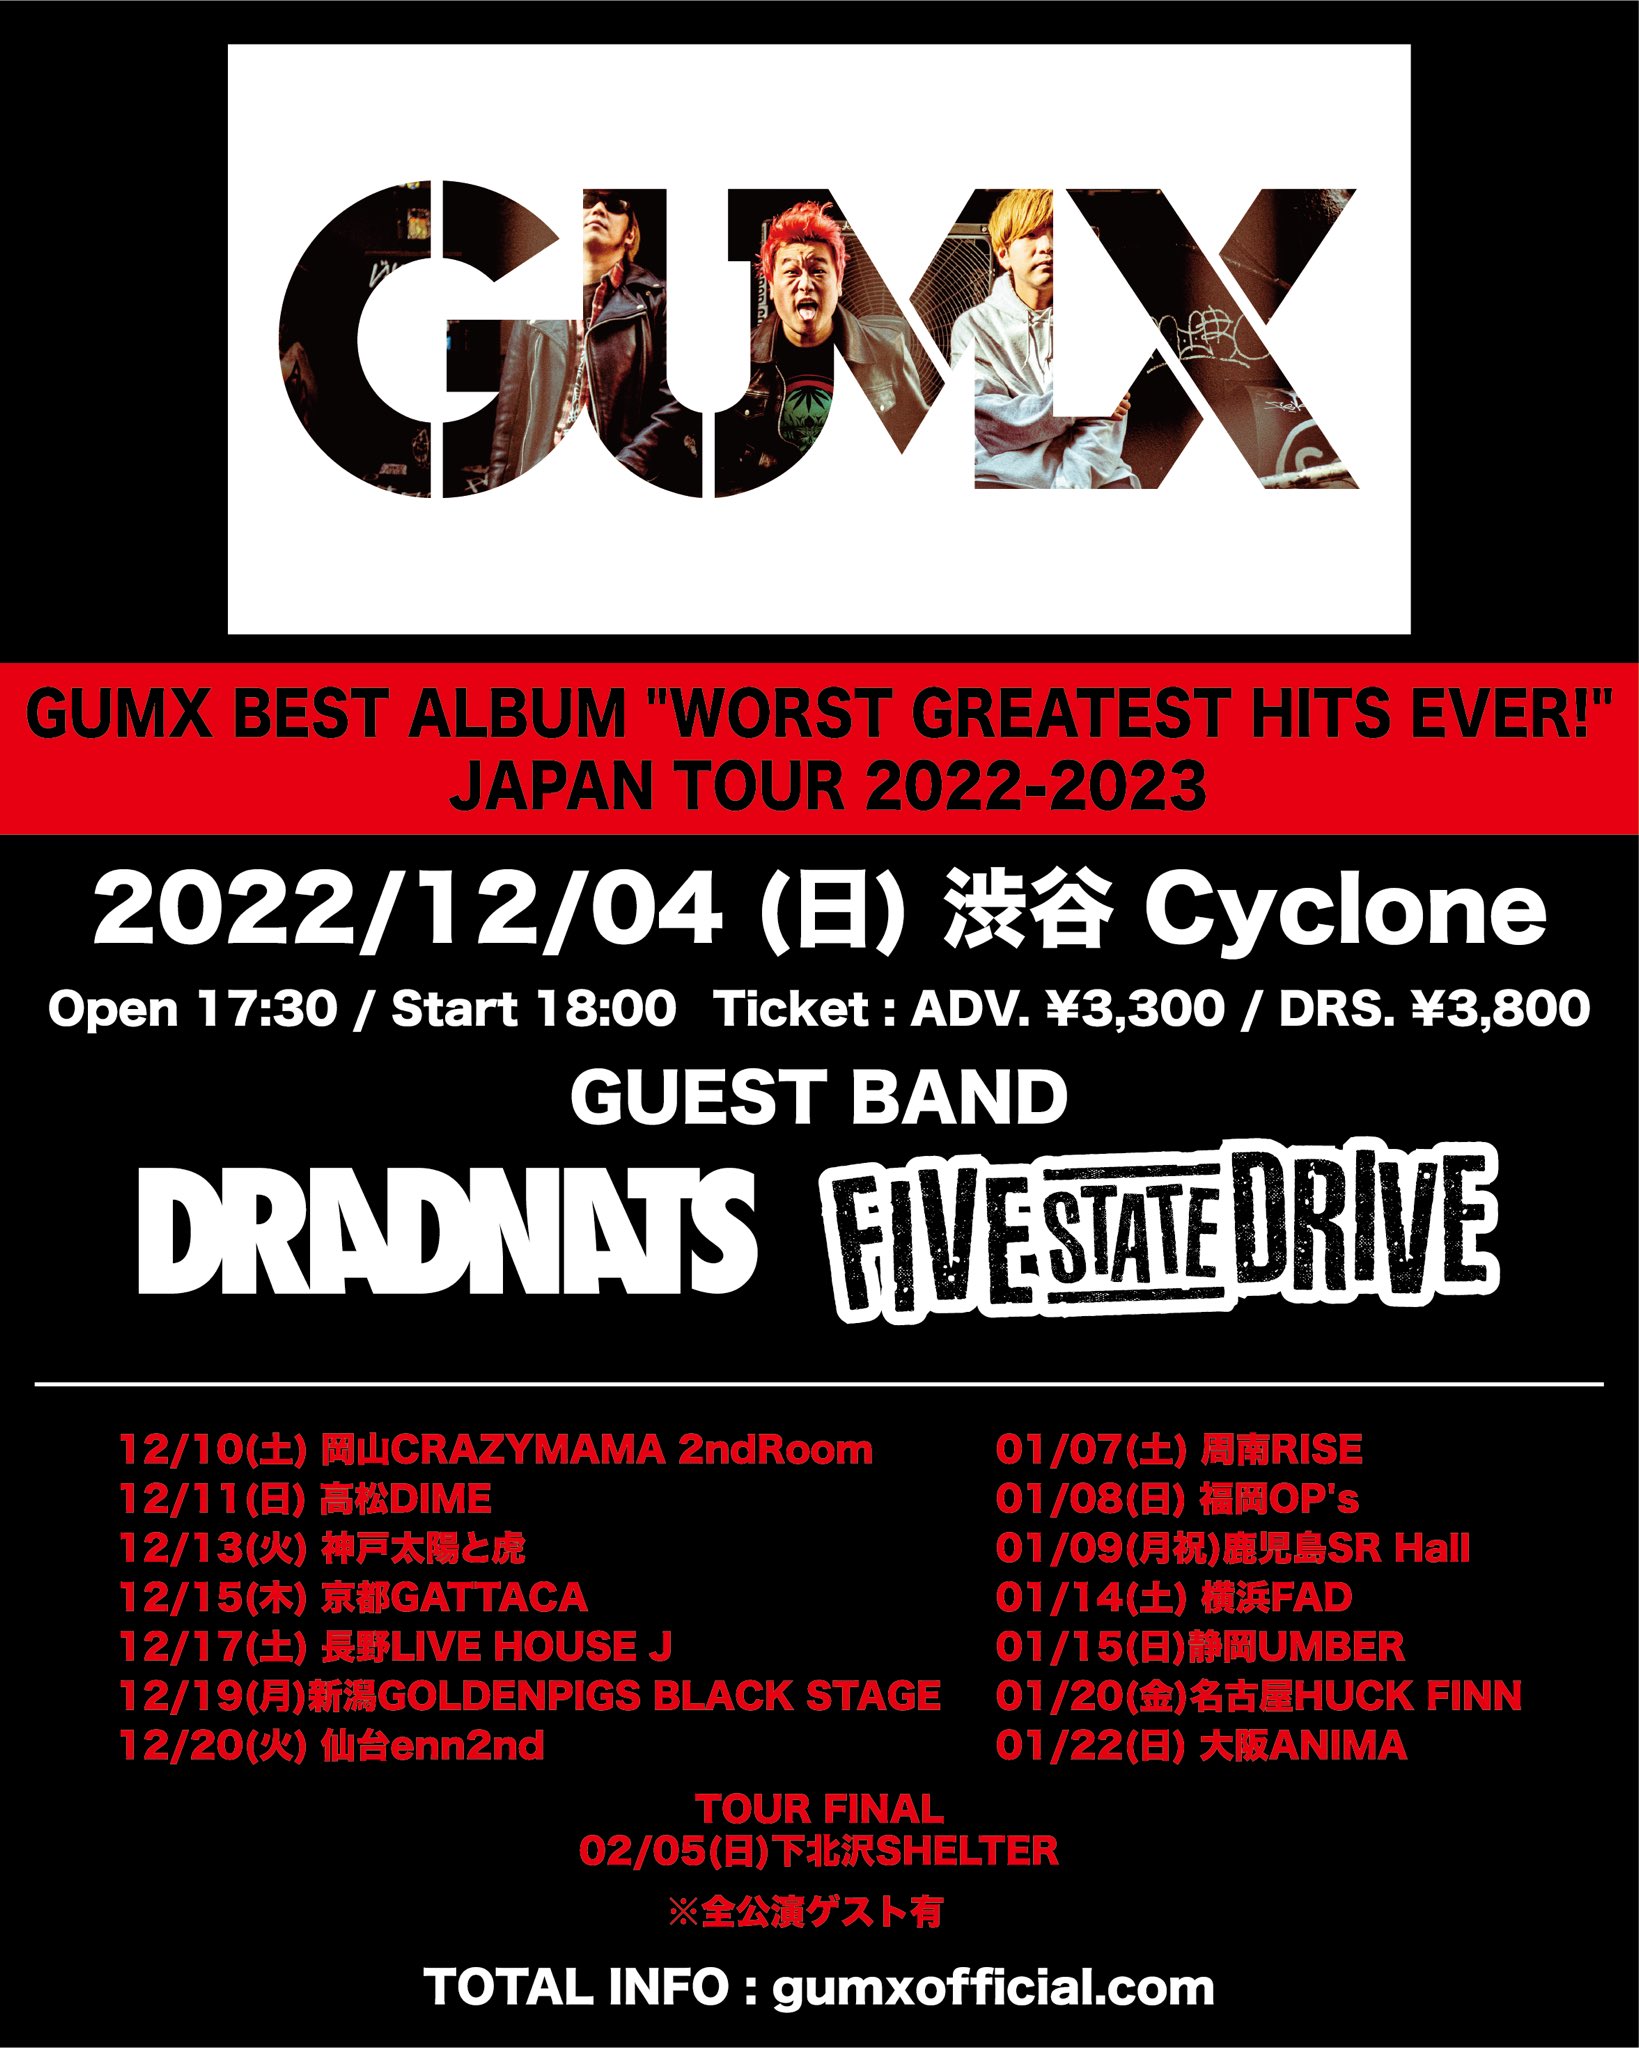 GUMX BEST ALBUM "WORST GREATEST HITS EVER!" JAPAN TOUR 2022-2023